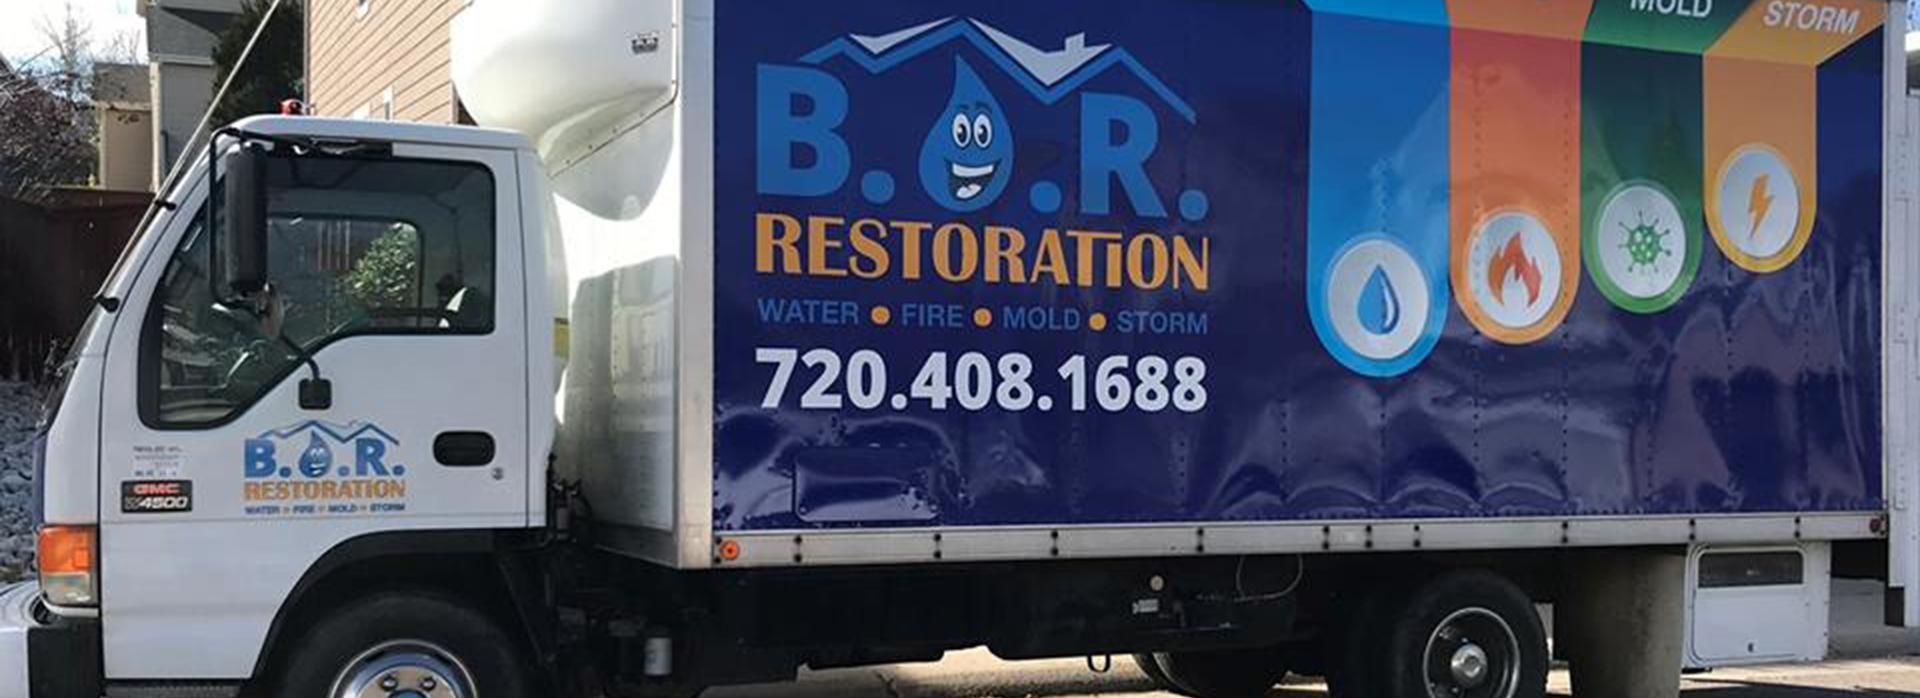 truck-bor-restoration-franchise-small